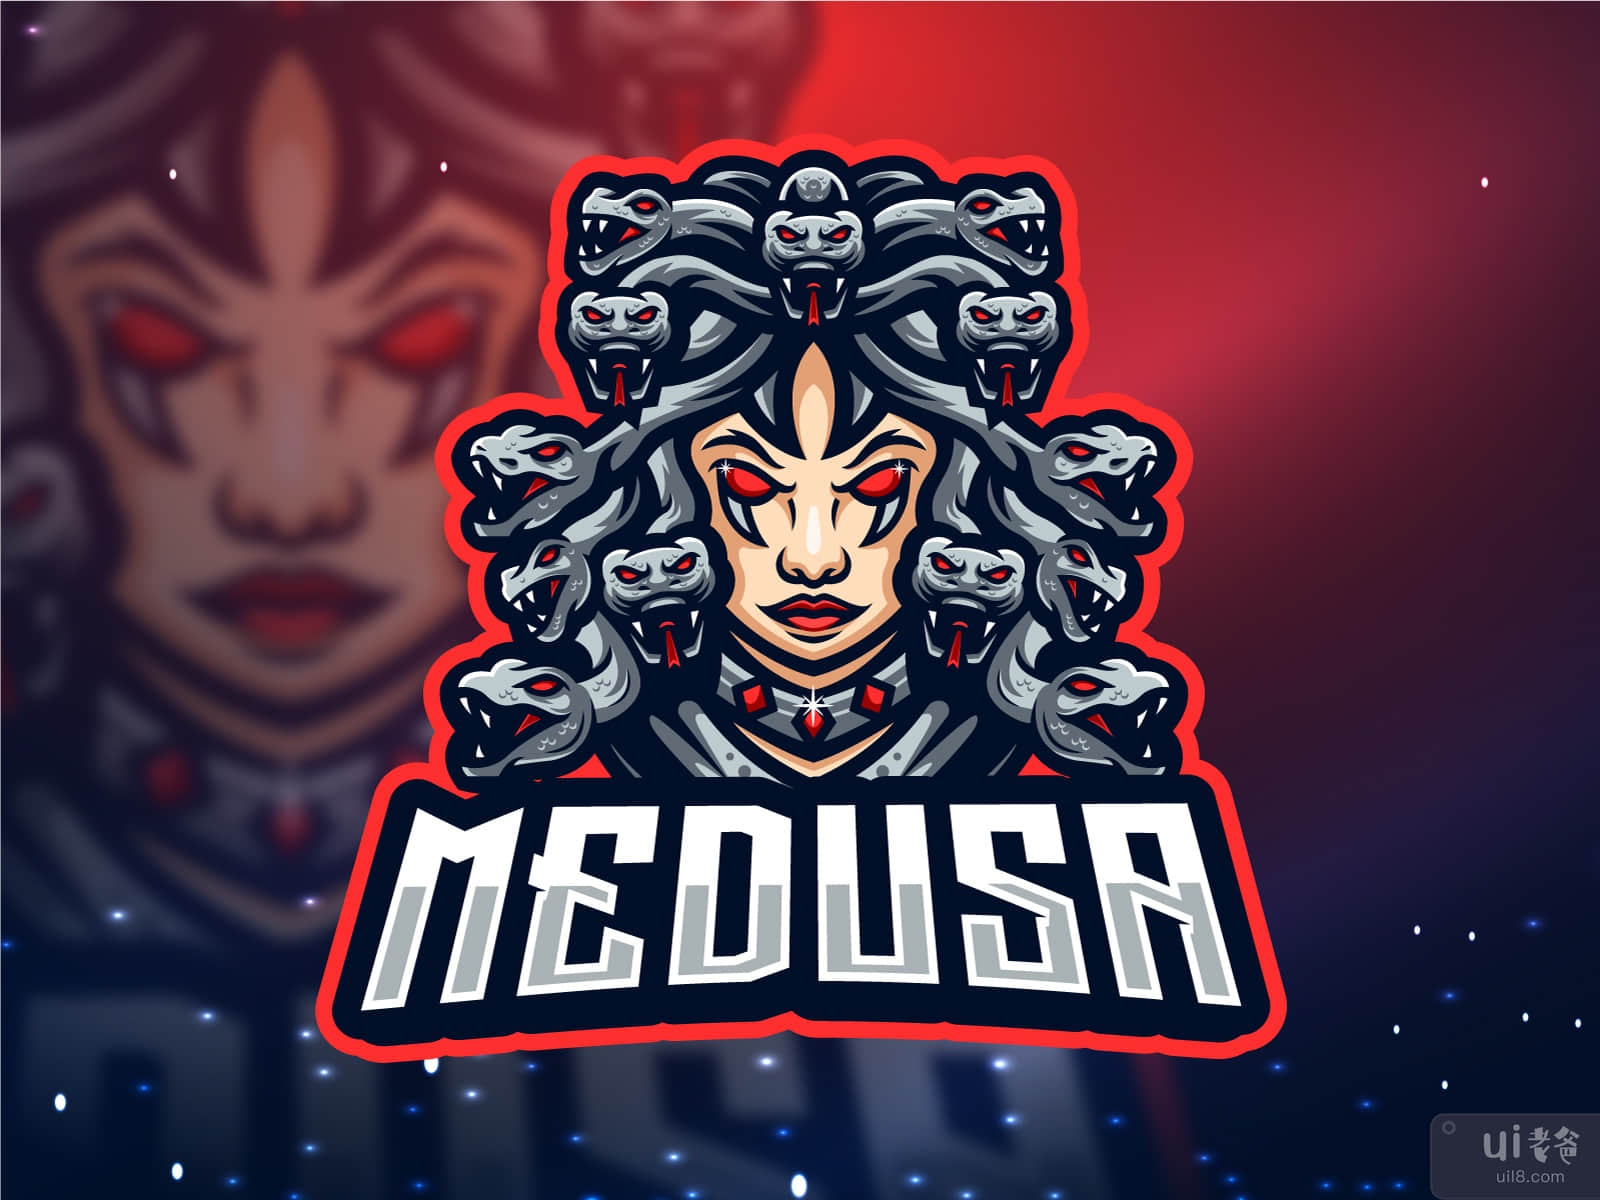 Medusa esport mascot logo design vector